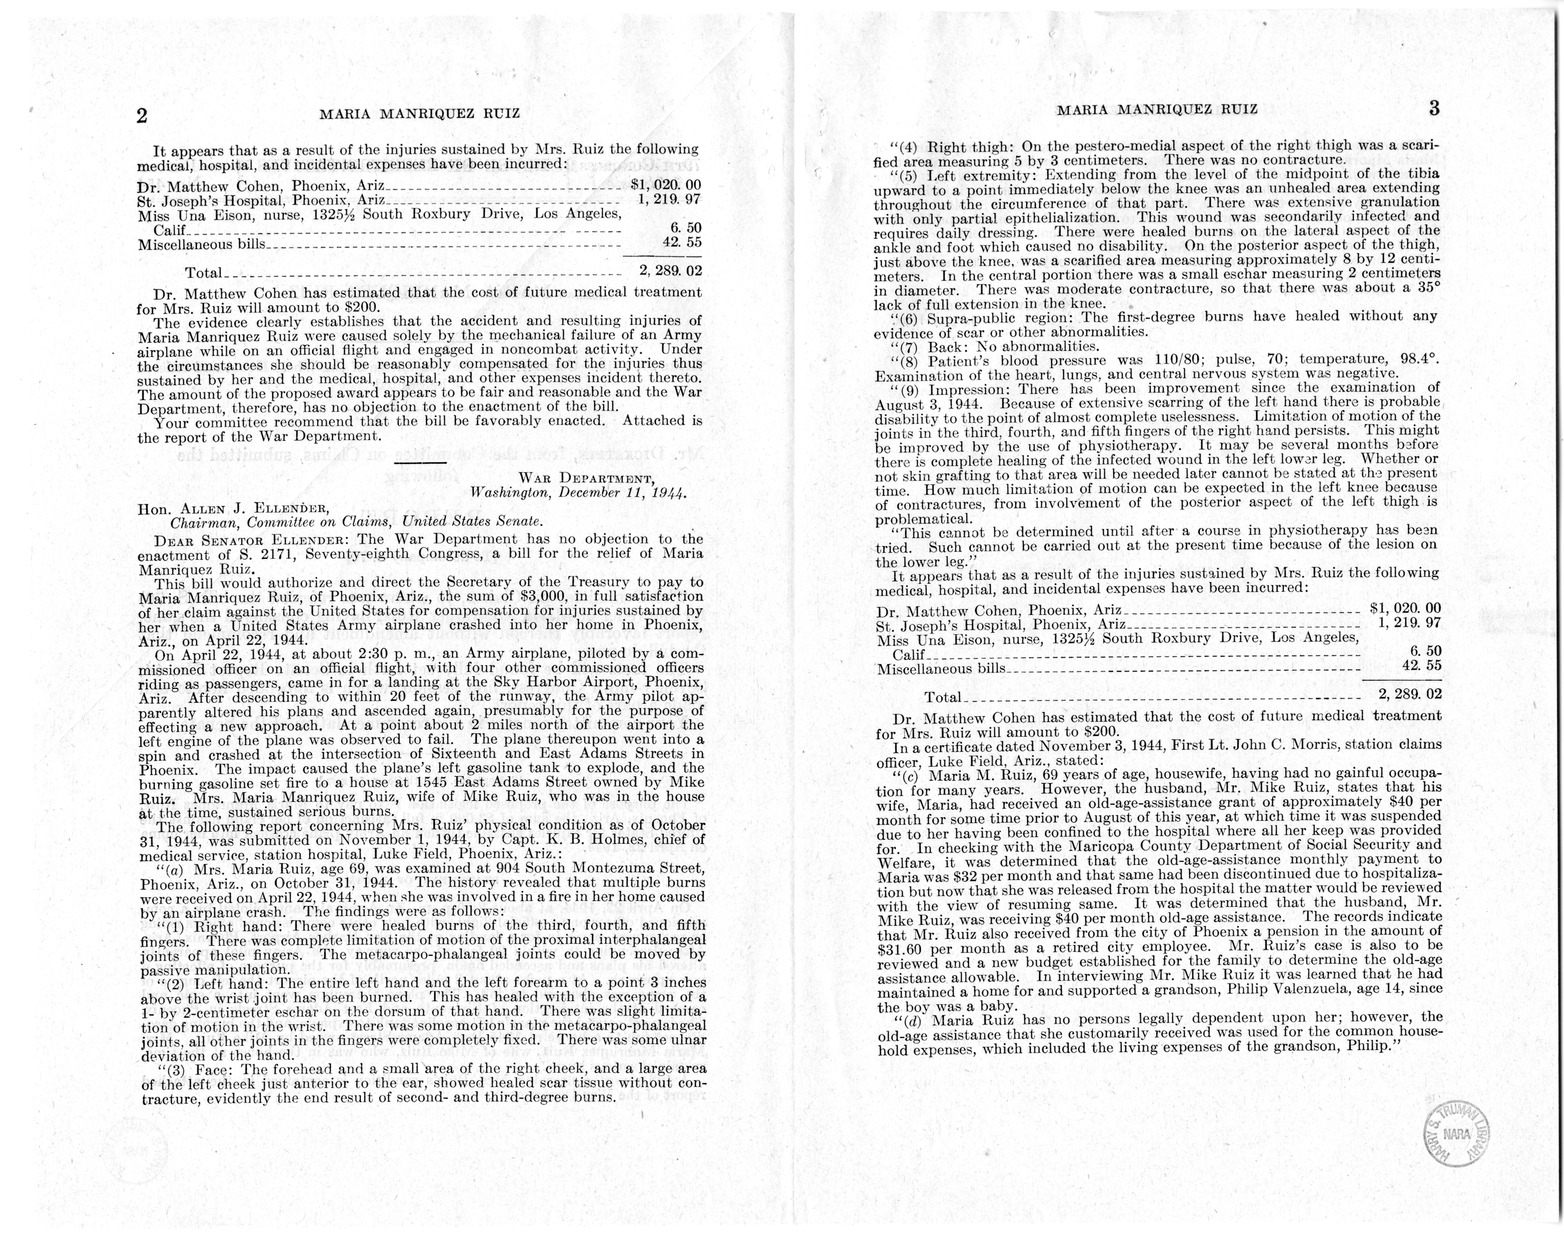 Memorandum from Frederick J. Bailey to M. C. Latta, S. 70, For the Relief of Maria Manriquez Ruiz, with Attachments